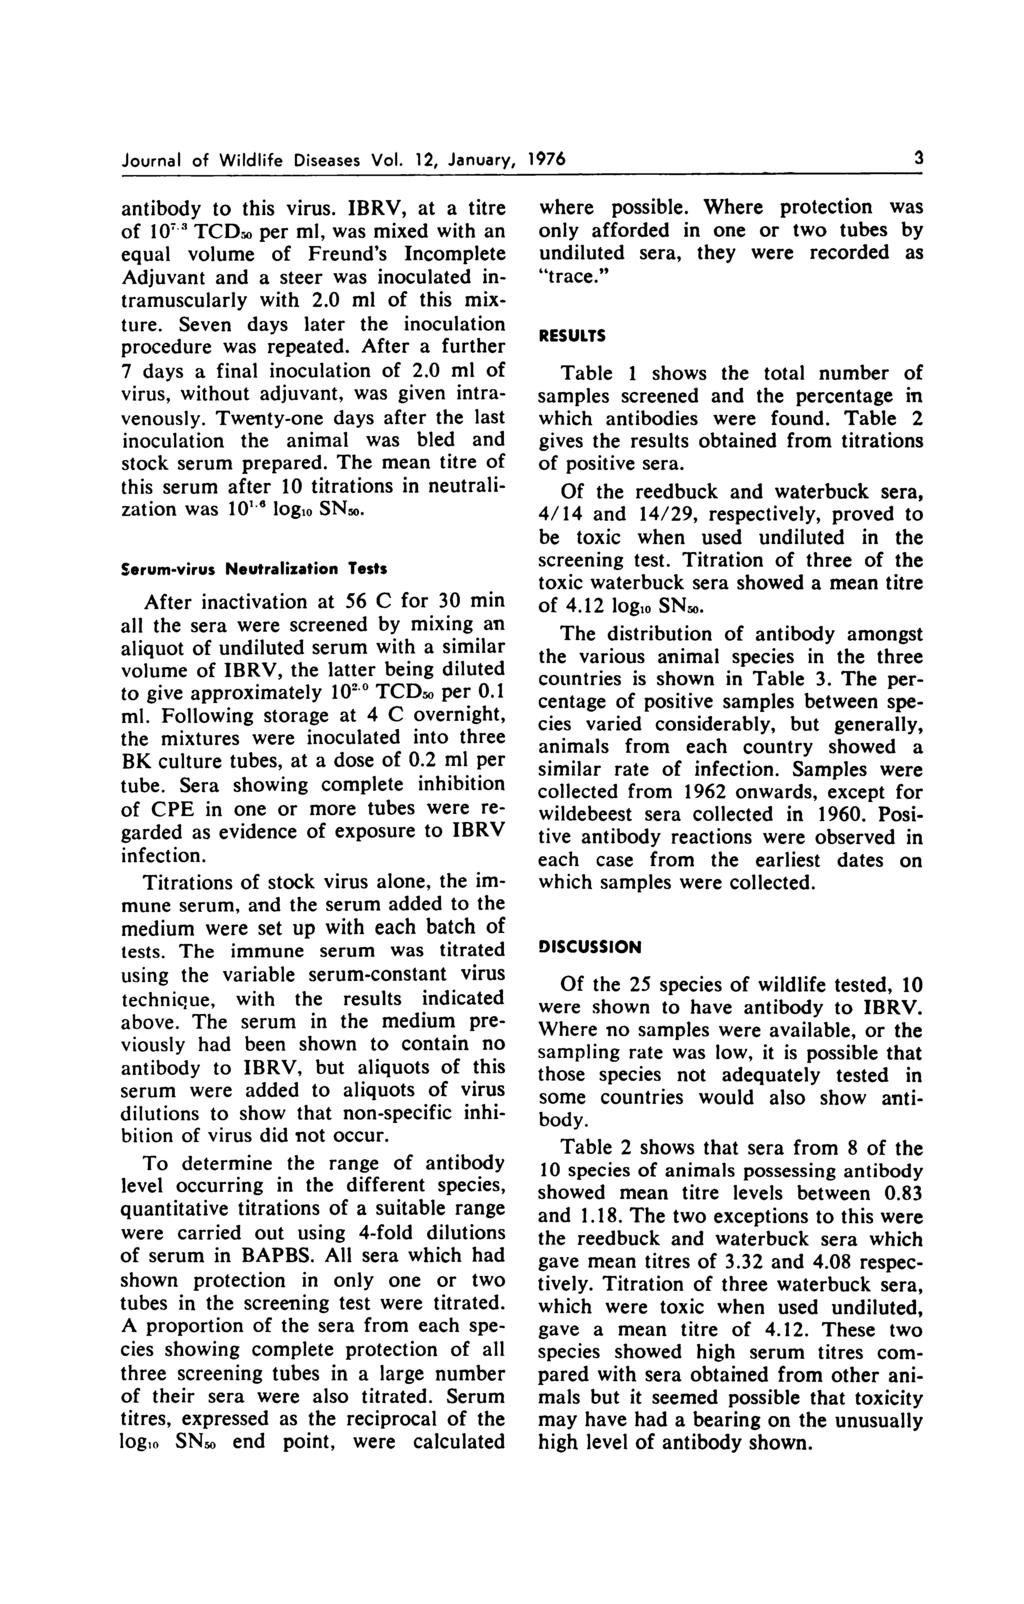 Journal of Wildlife Diseases Vol. 12, January, 1976 a antibody to this virus.